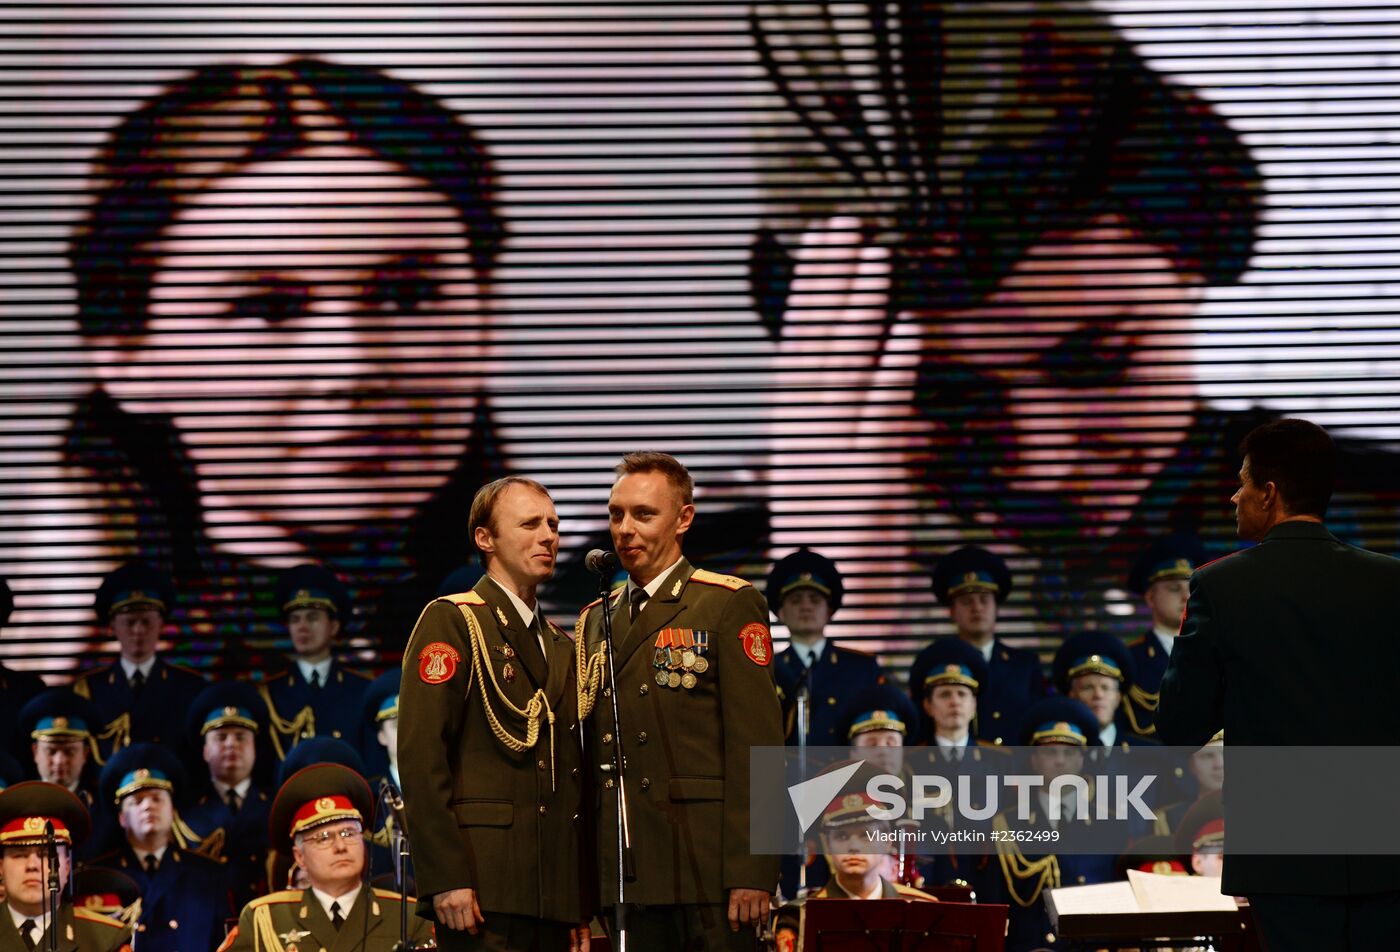 Performance of Alexandrov ensemble at Winter Arts Festival in Sochi